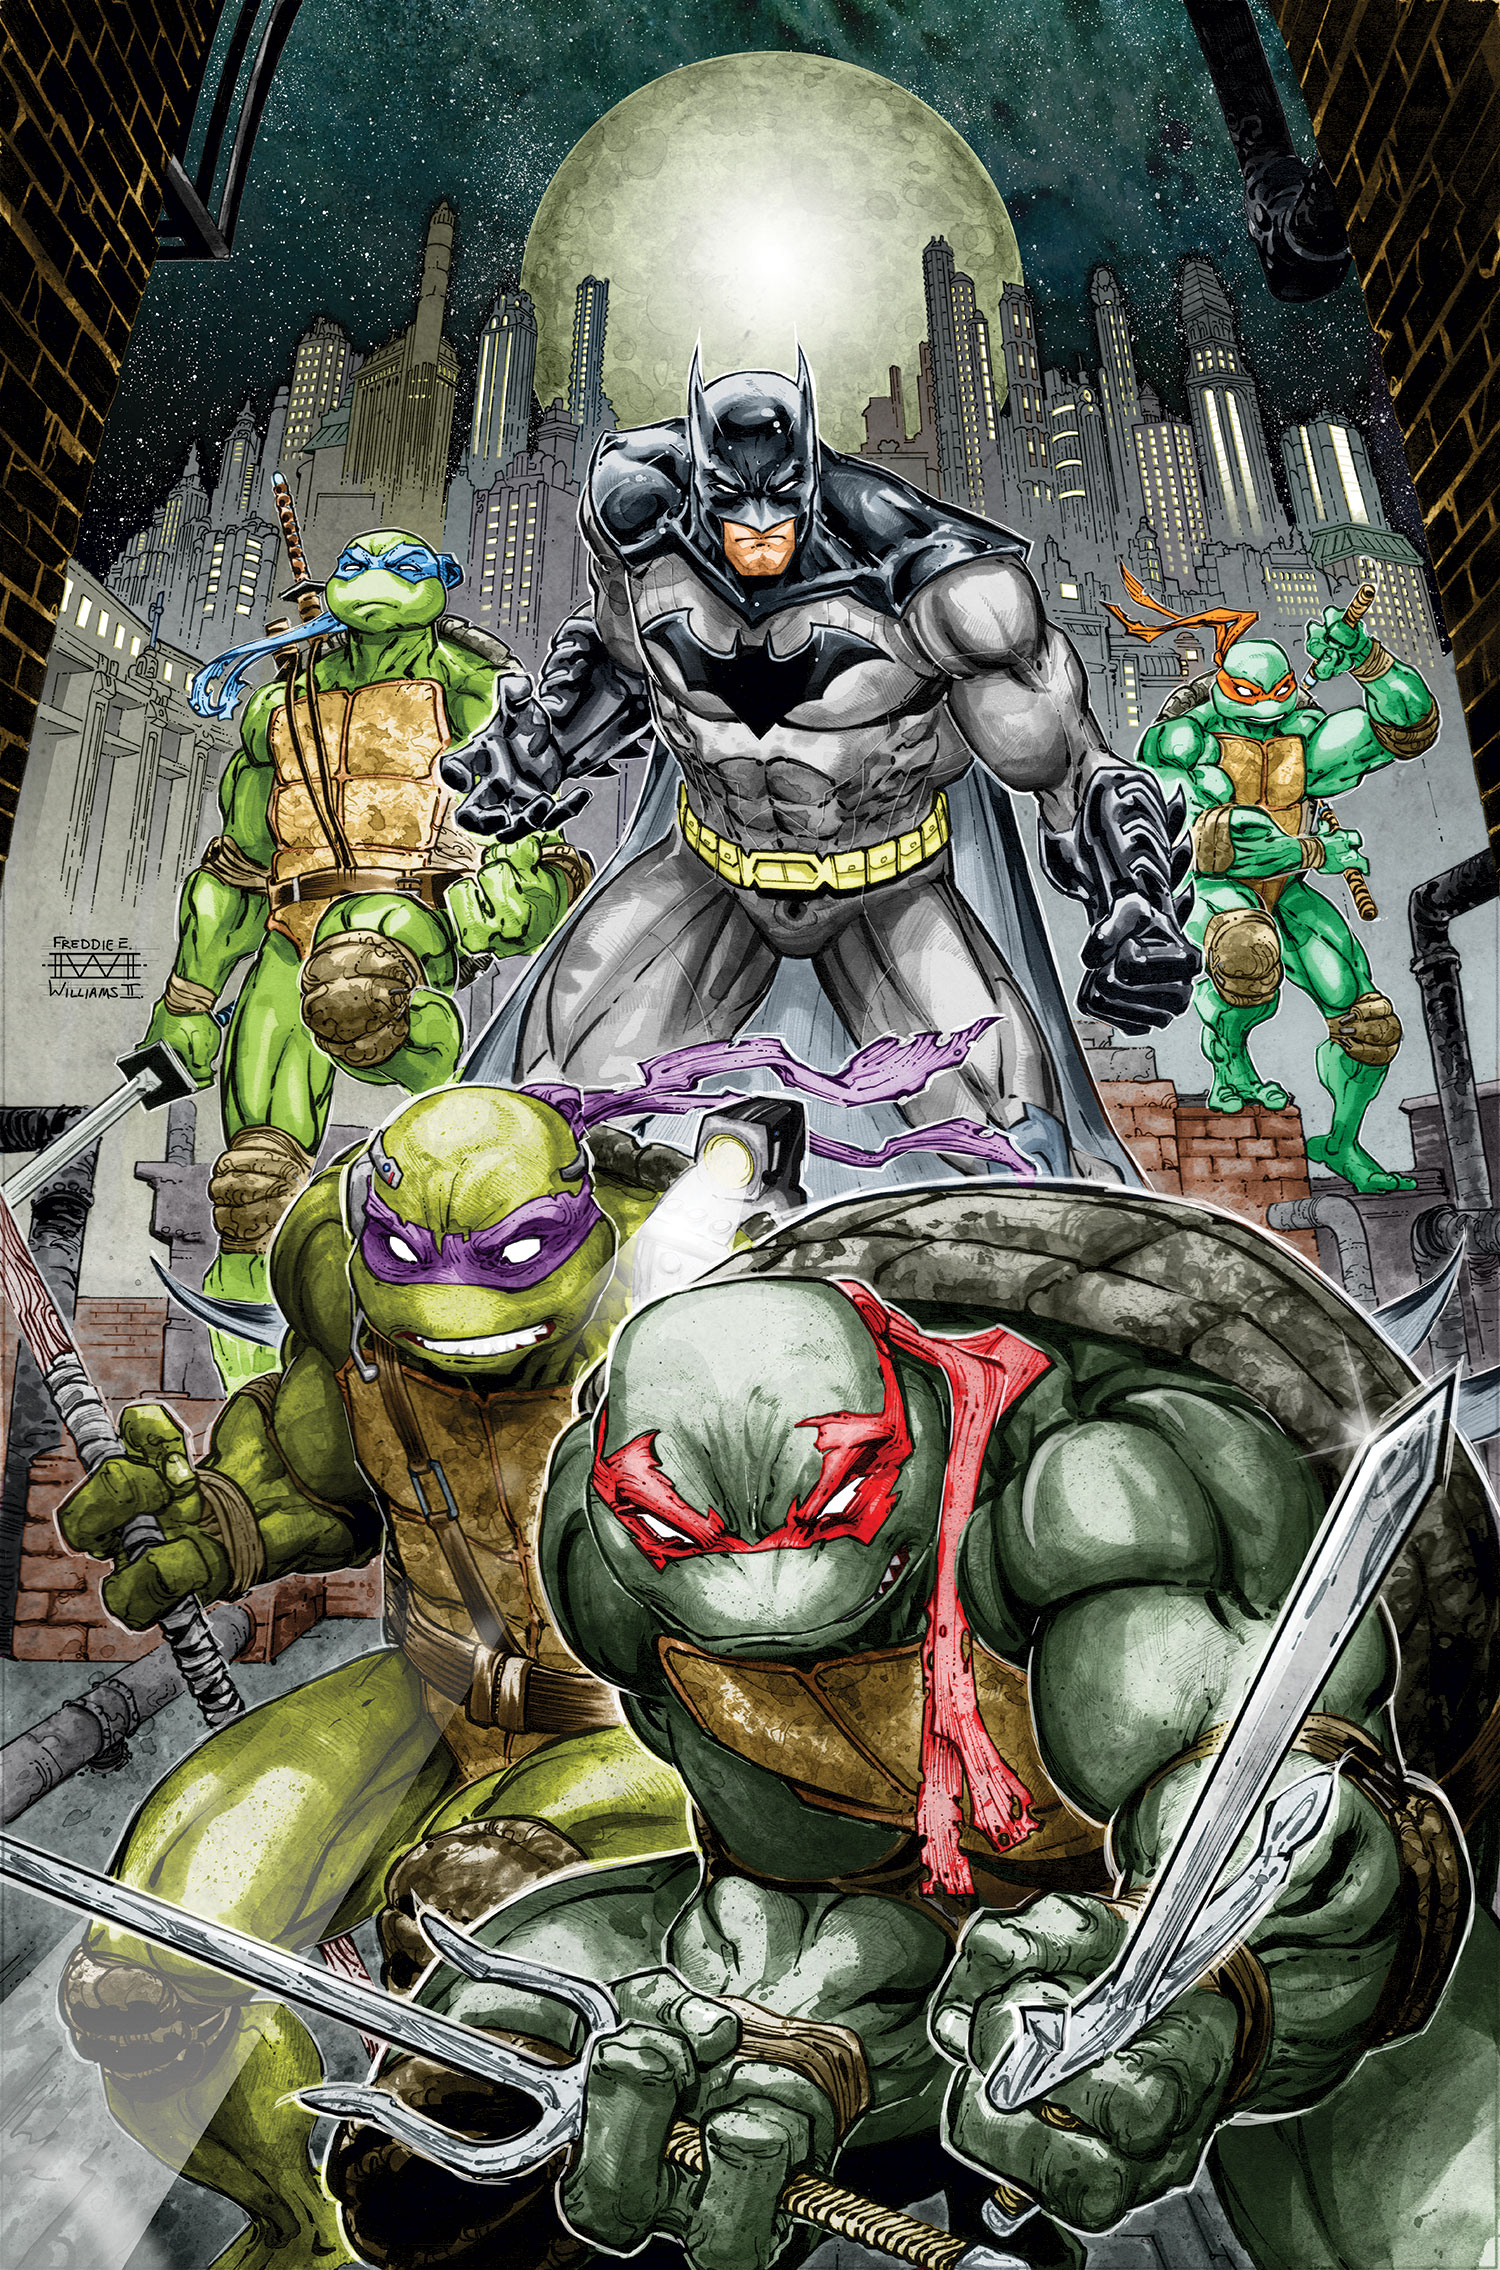 https://batman-news.com/wp-content/uploads/2016/06/Batman-Ninja-Turtles-DC.jpg